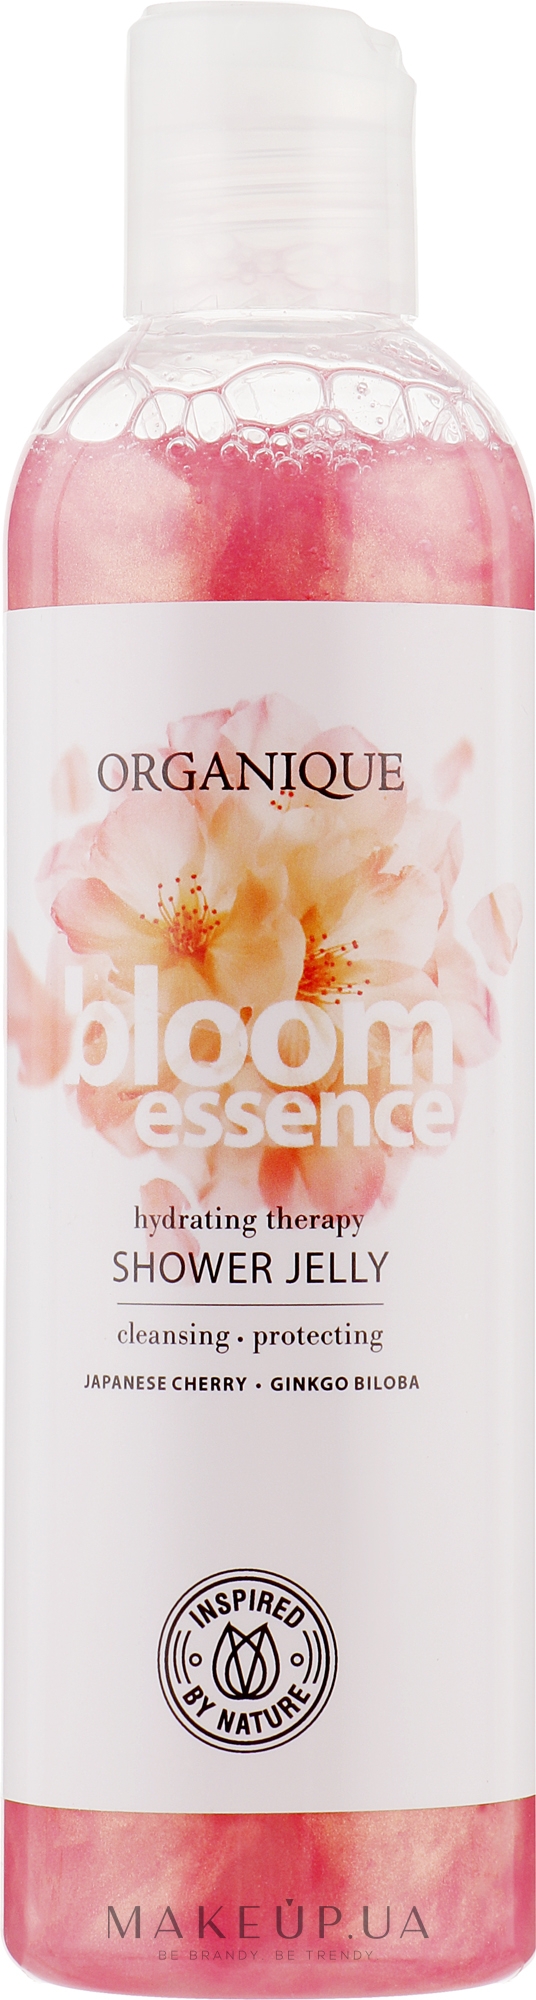 М'який гель для душу - Organique Bloom Essence Mild Shower Jelly  — фото 250ml